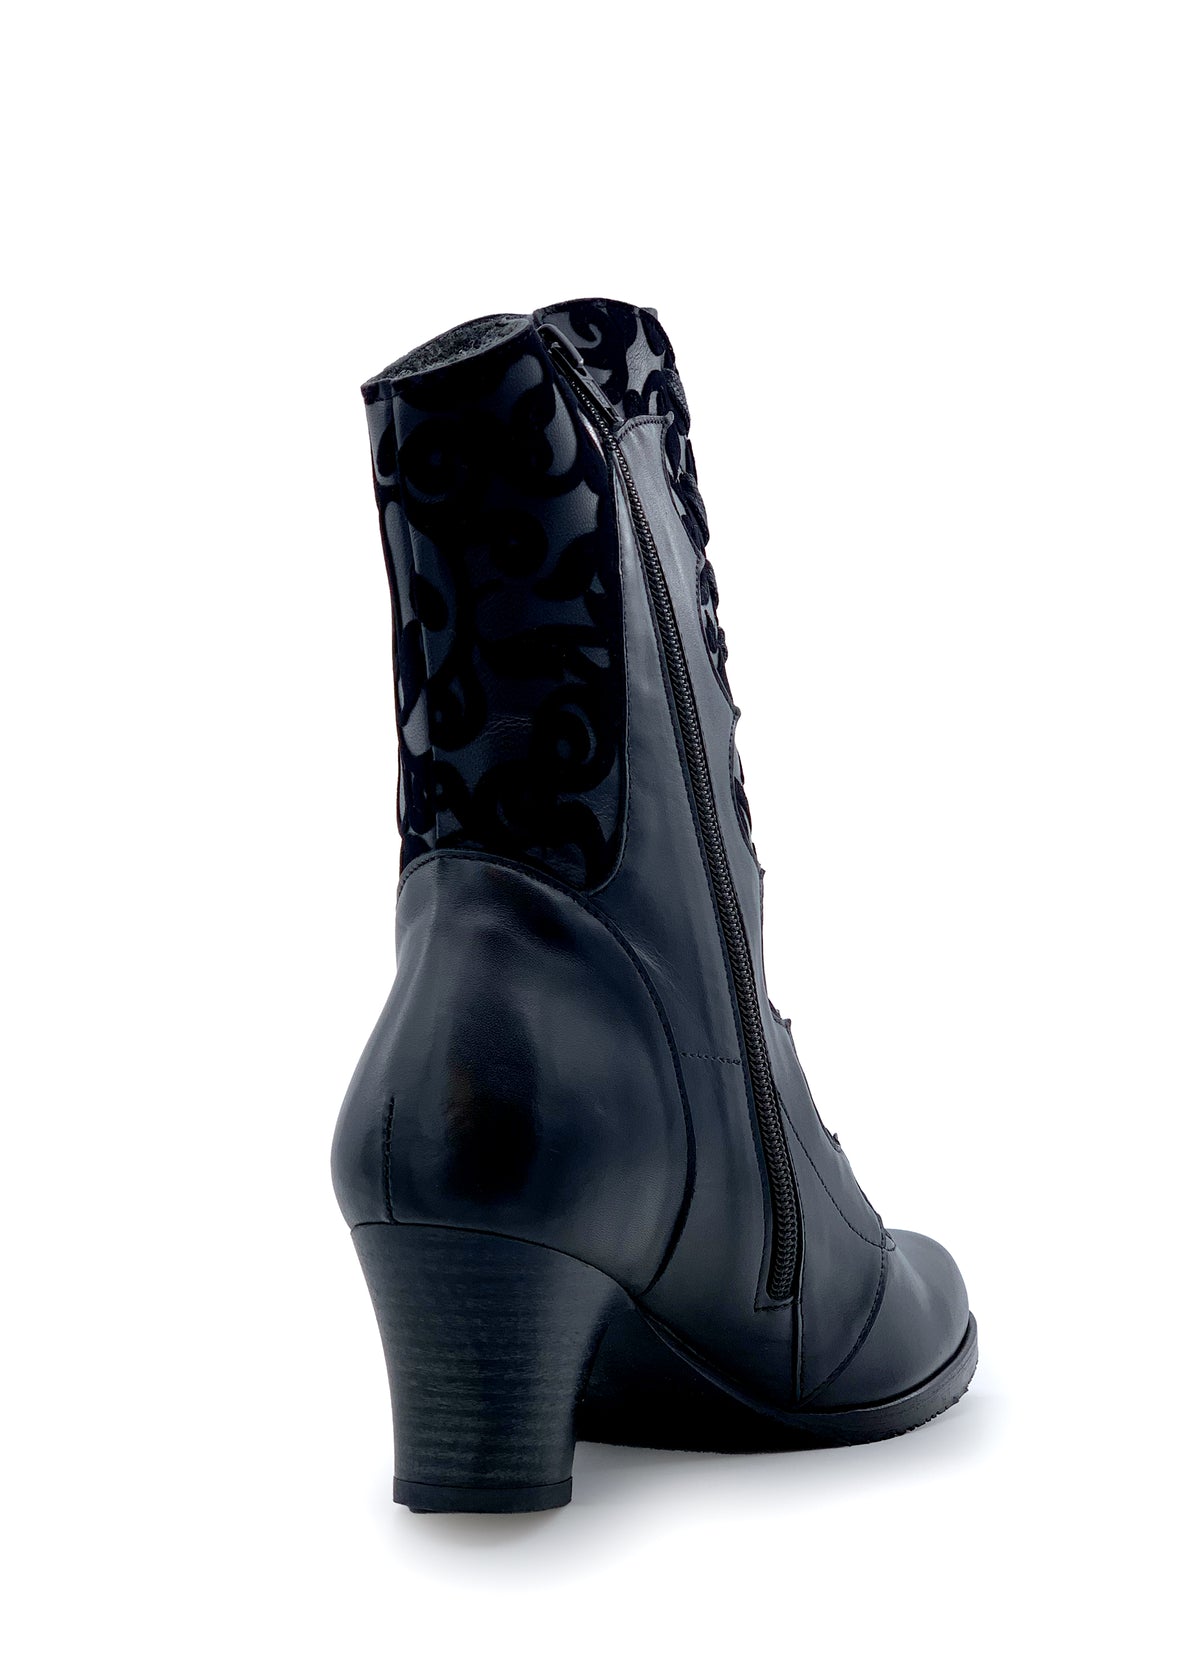 Heeled boots - Fanni, black